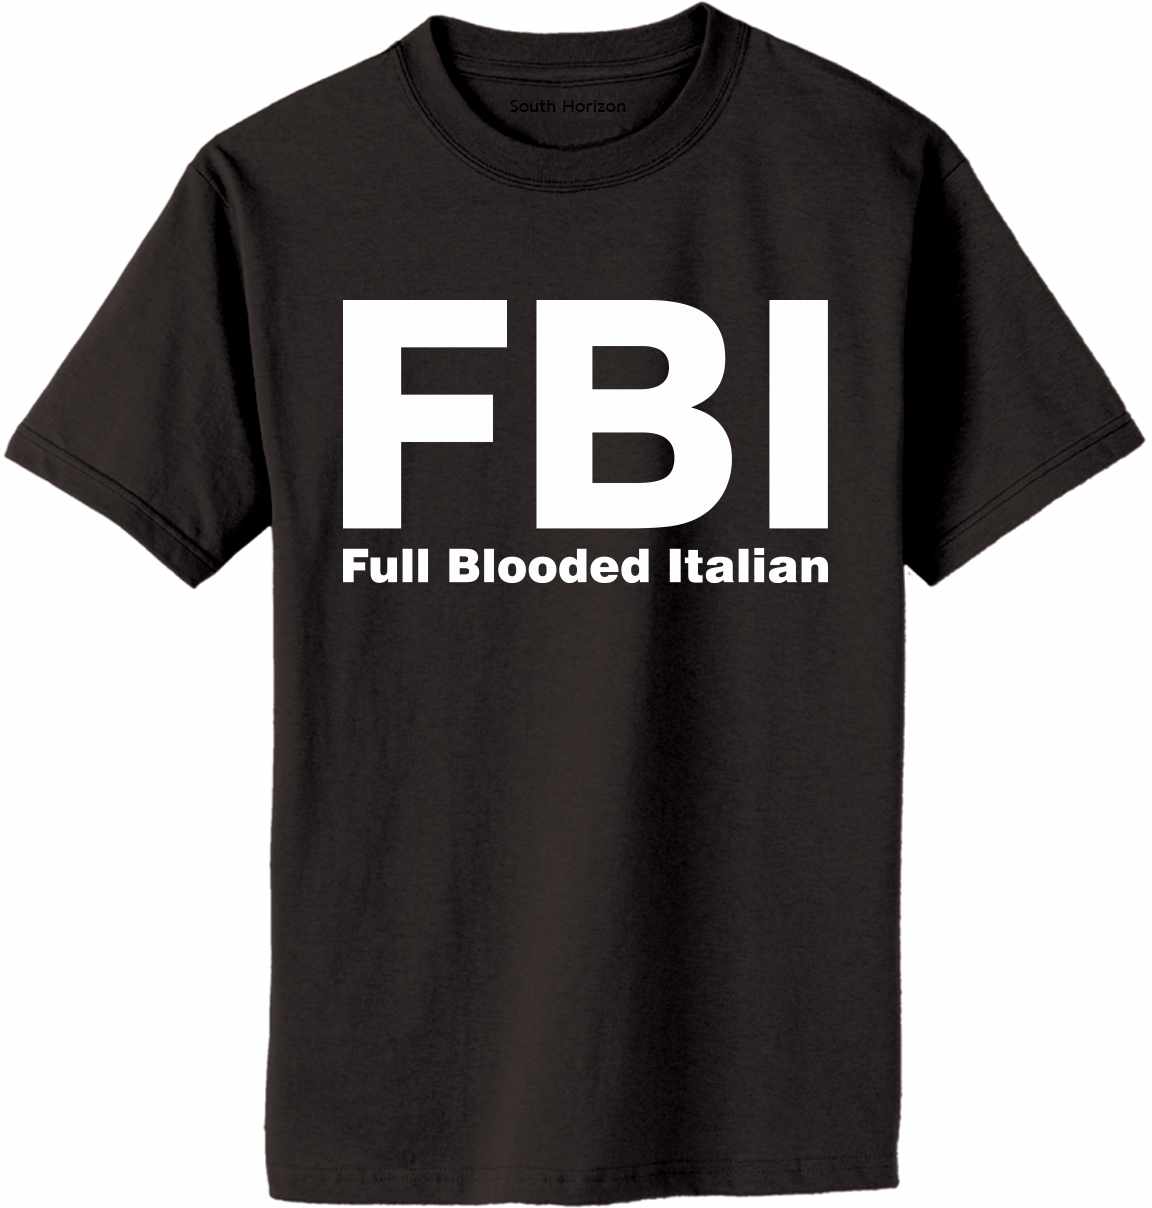 FBI - Full Blooded Italian Adult T-Shirt